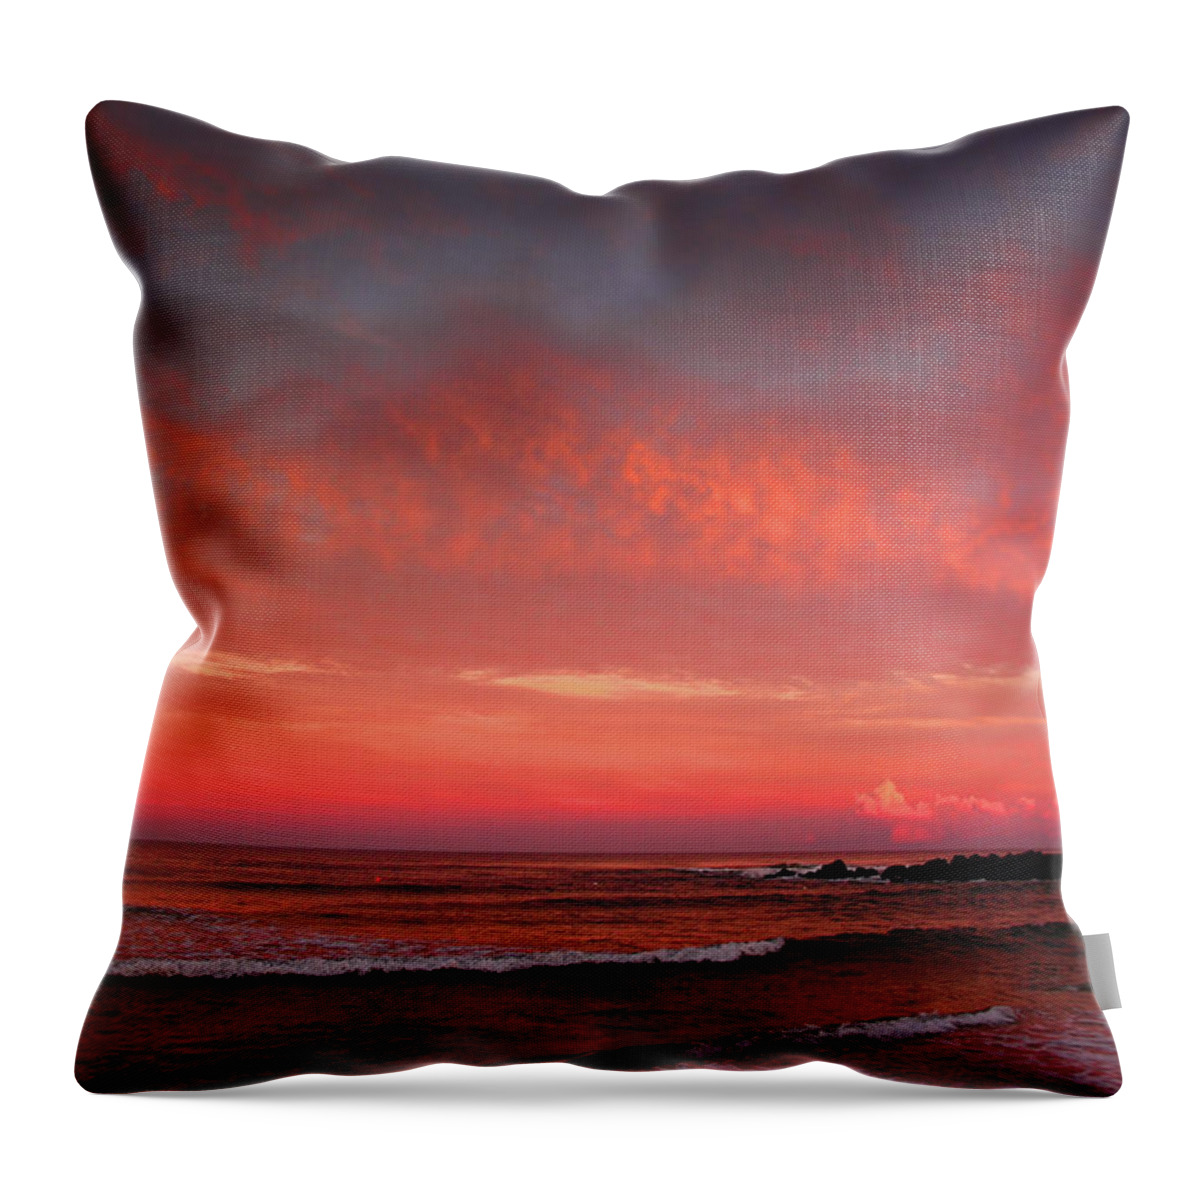 Nj Beach Sunset 4 Throw Pillow featuring the photograph NJ Beach Sunset 4 by Raymond Salani III